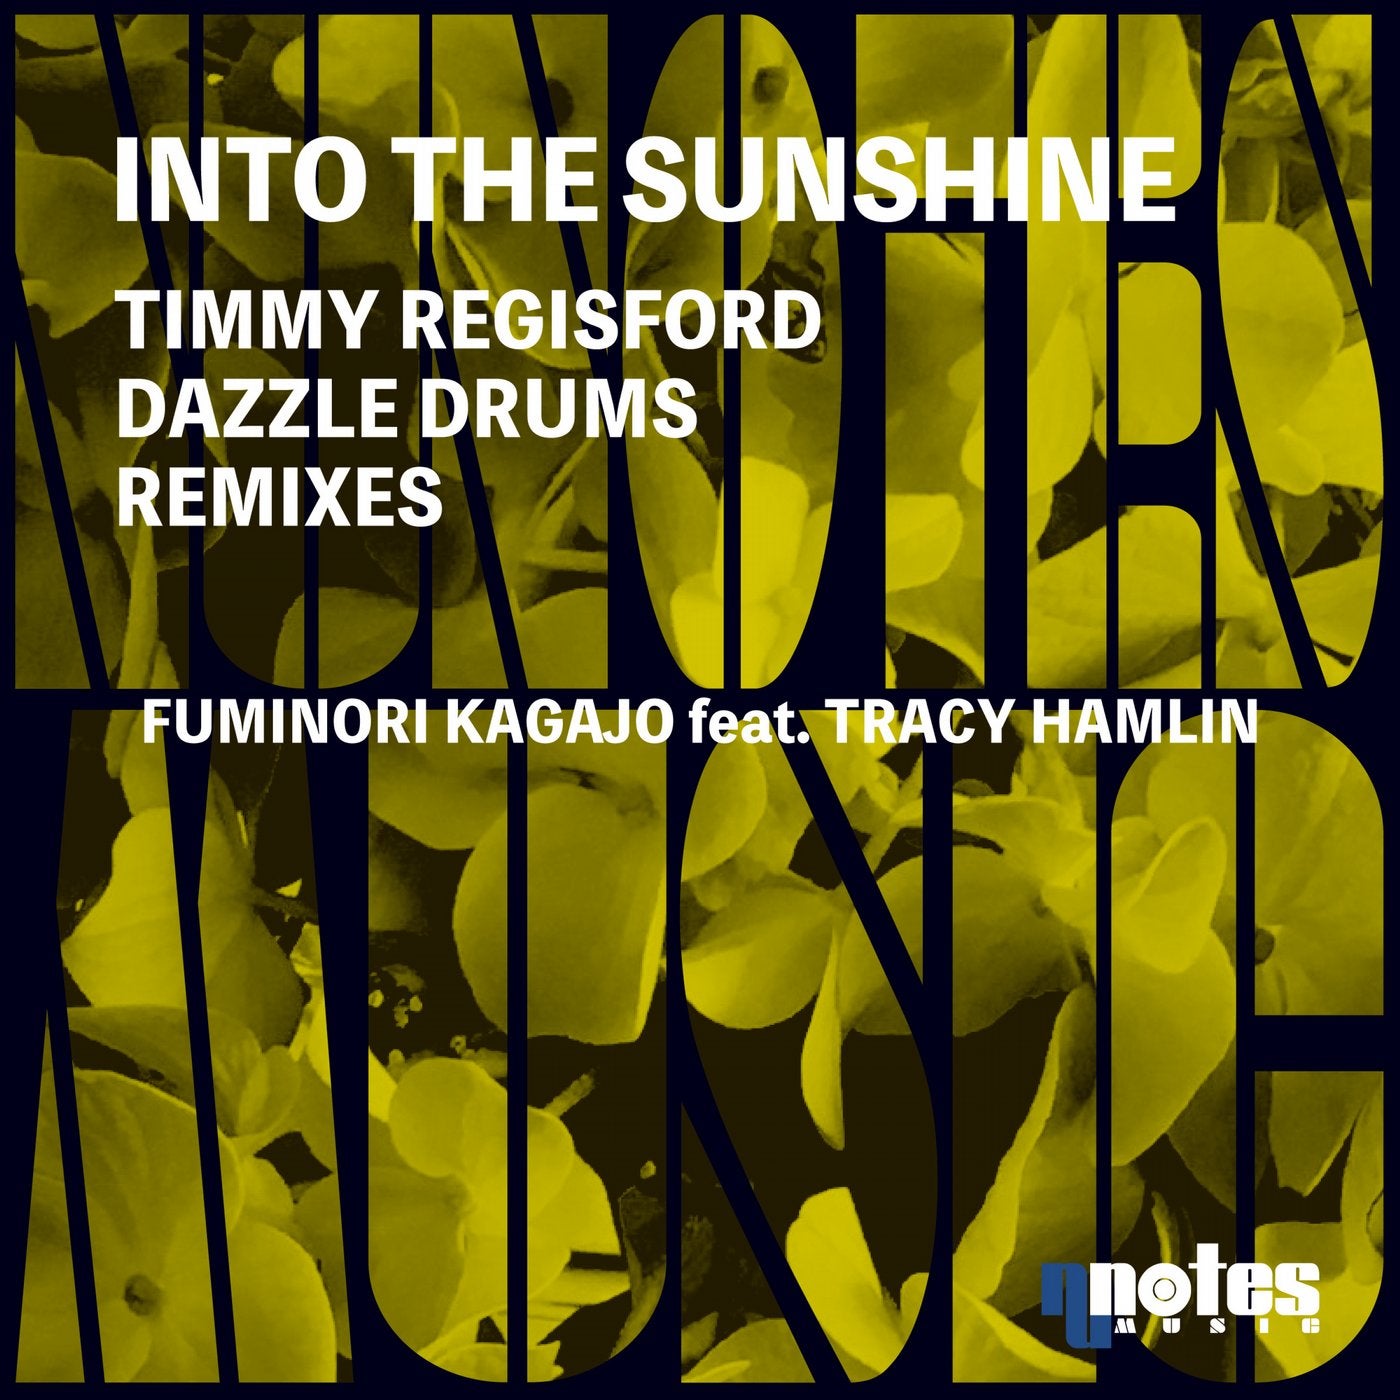 Timmy Regisford music download - Beatport